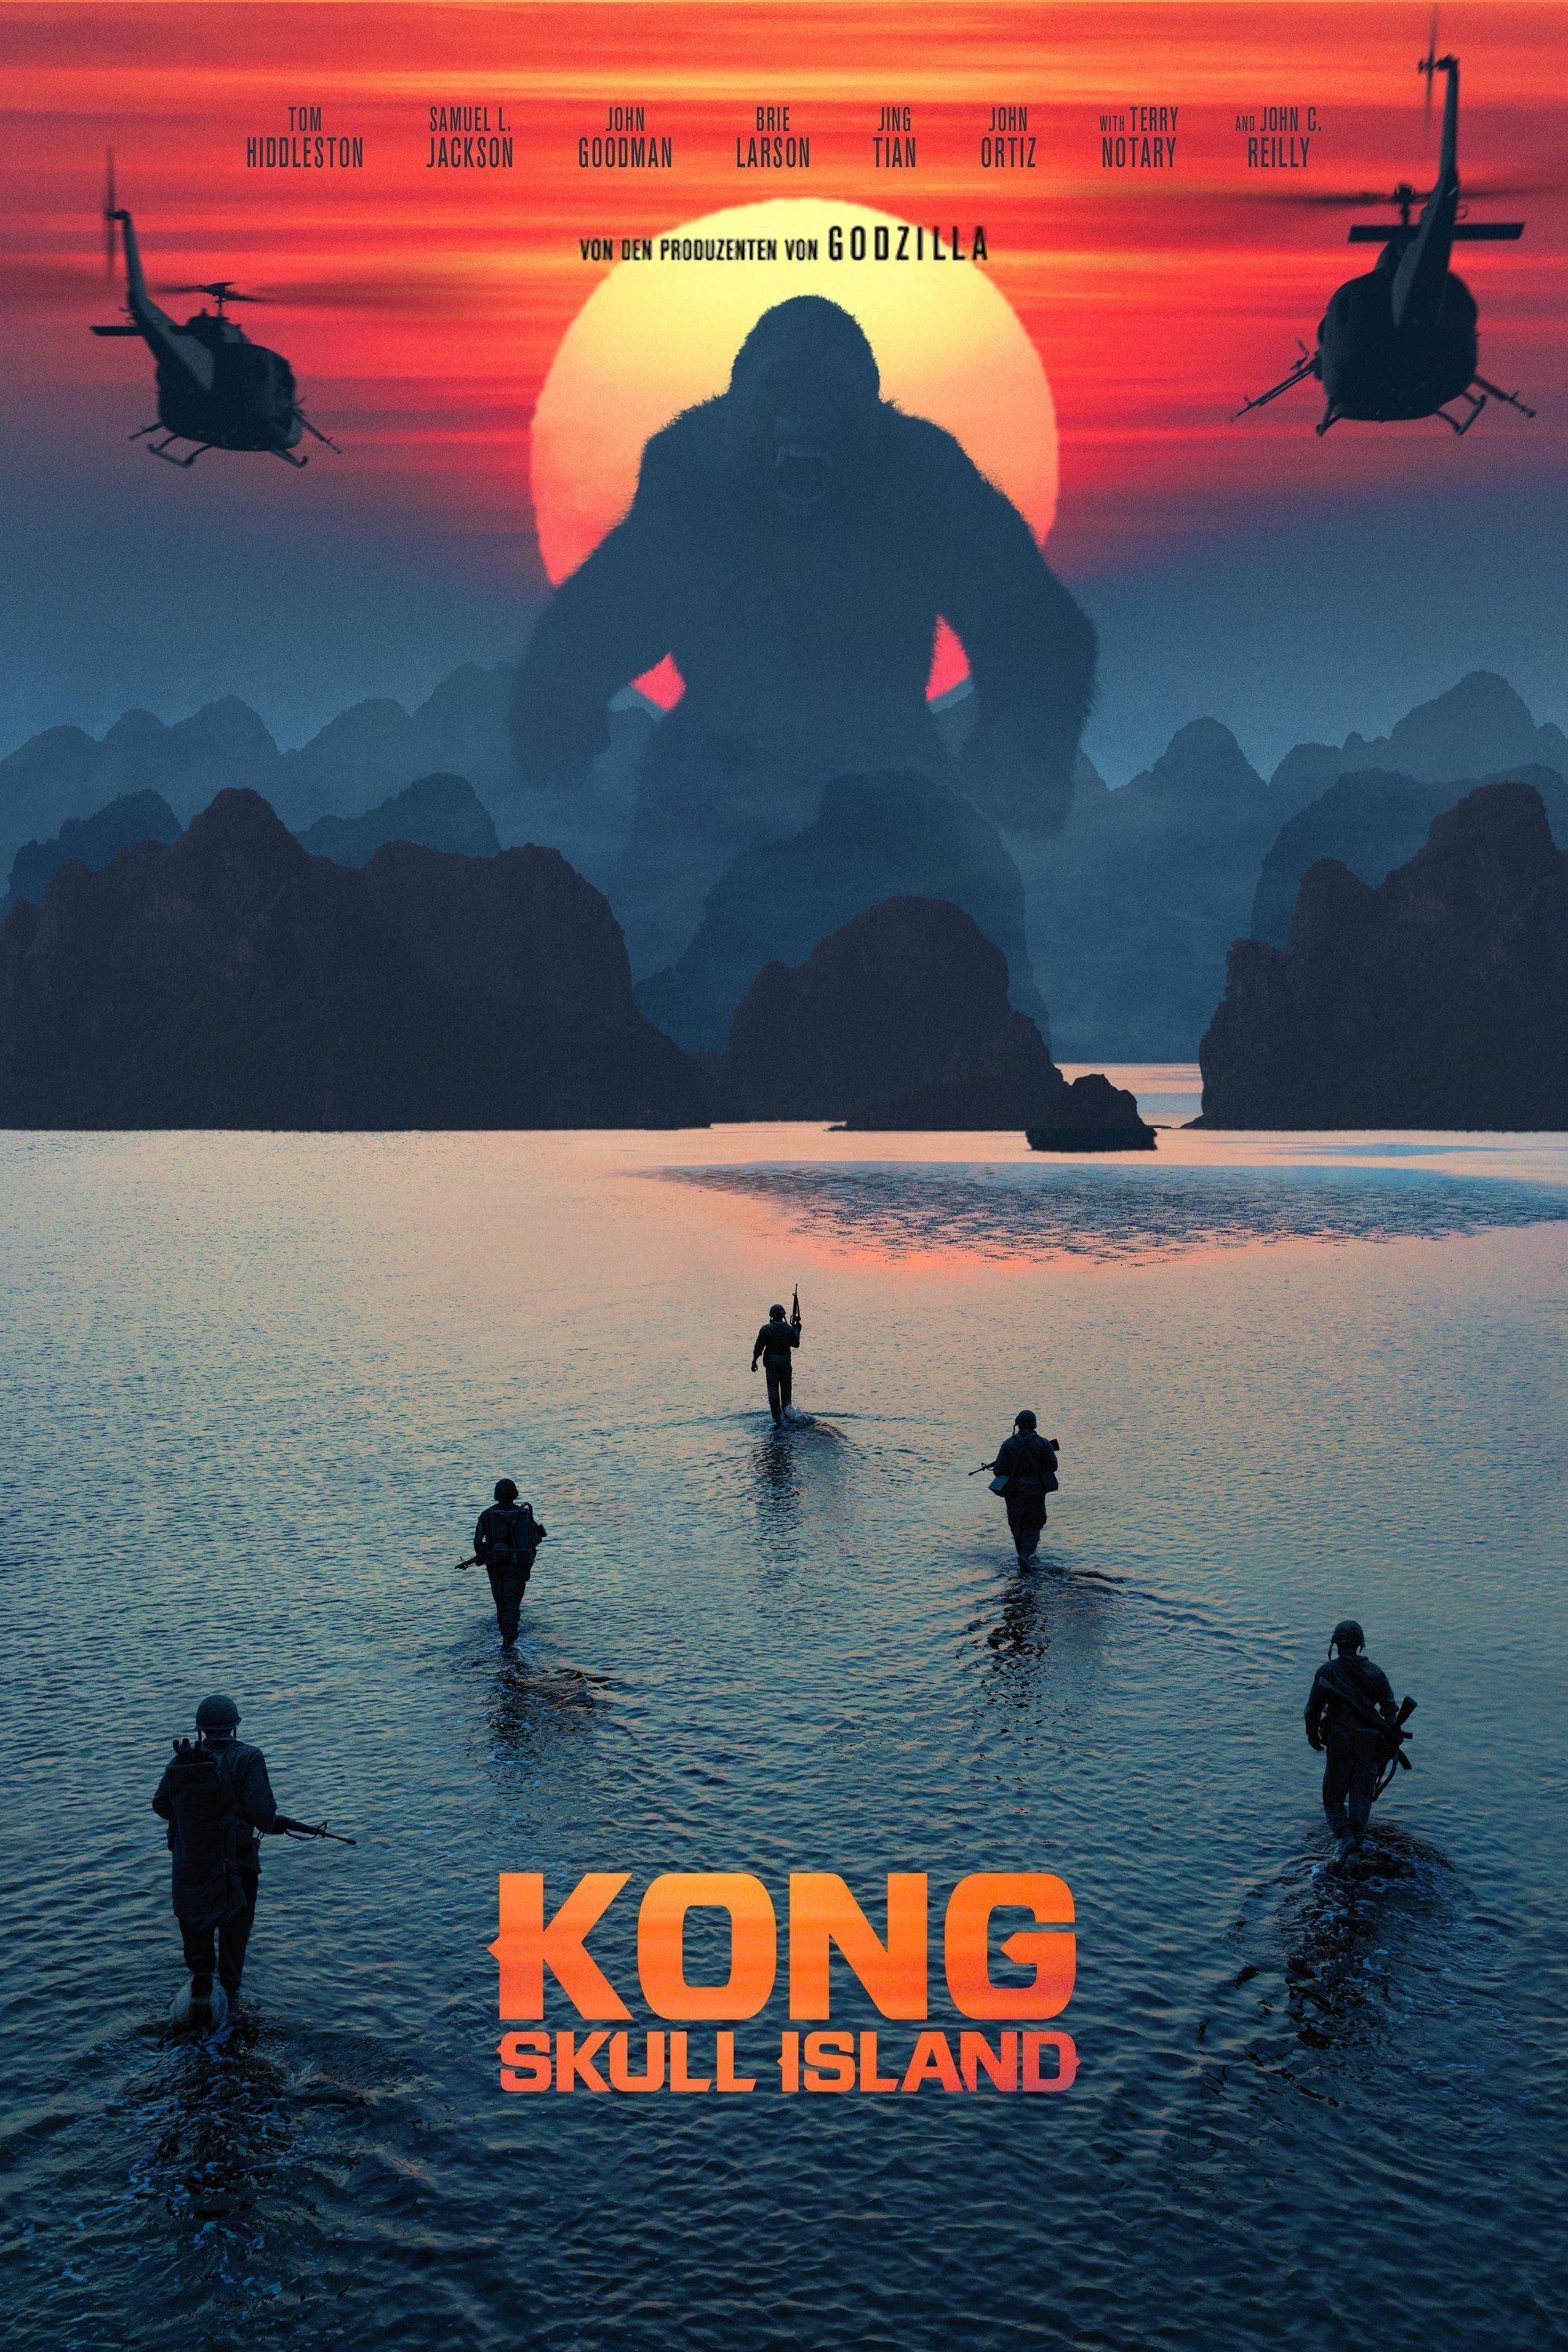 Plakat von "Kong: Skull Island"